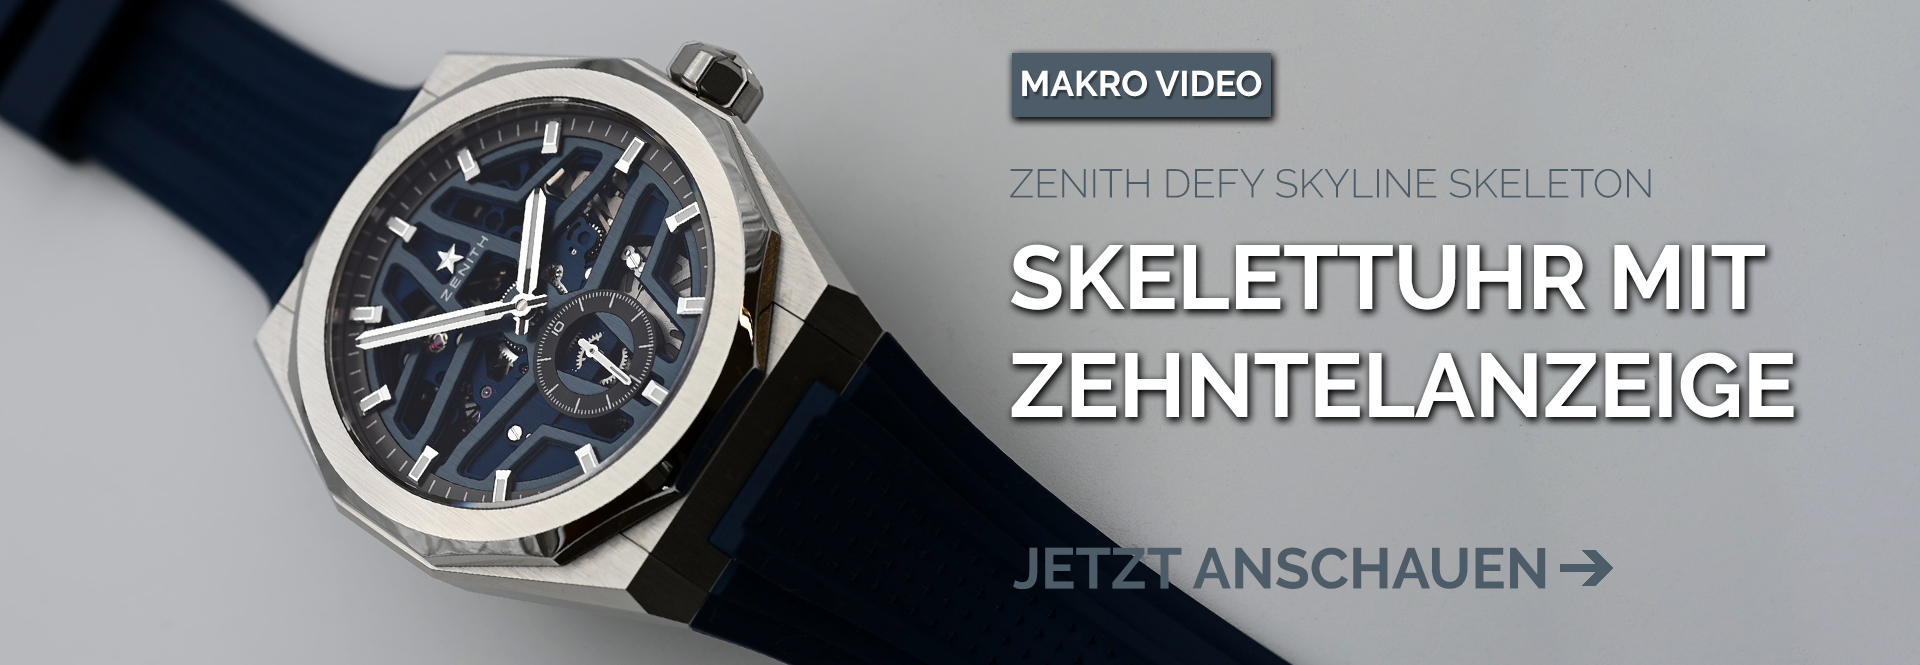 Zenith Defy Skyline Skeleton Makro Video stage